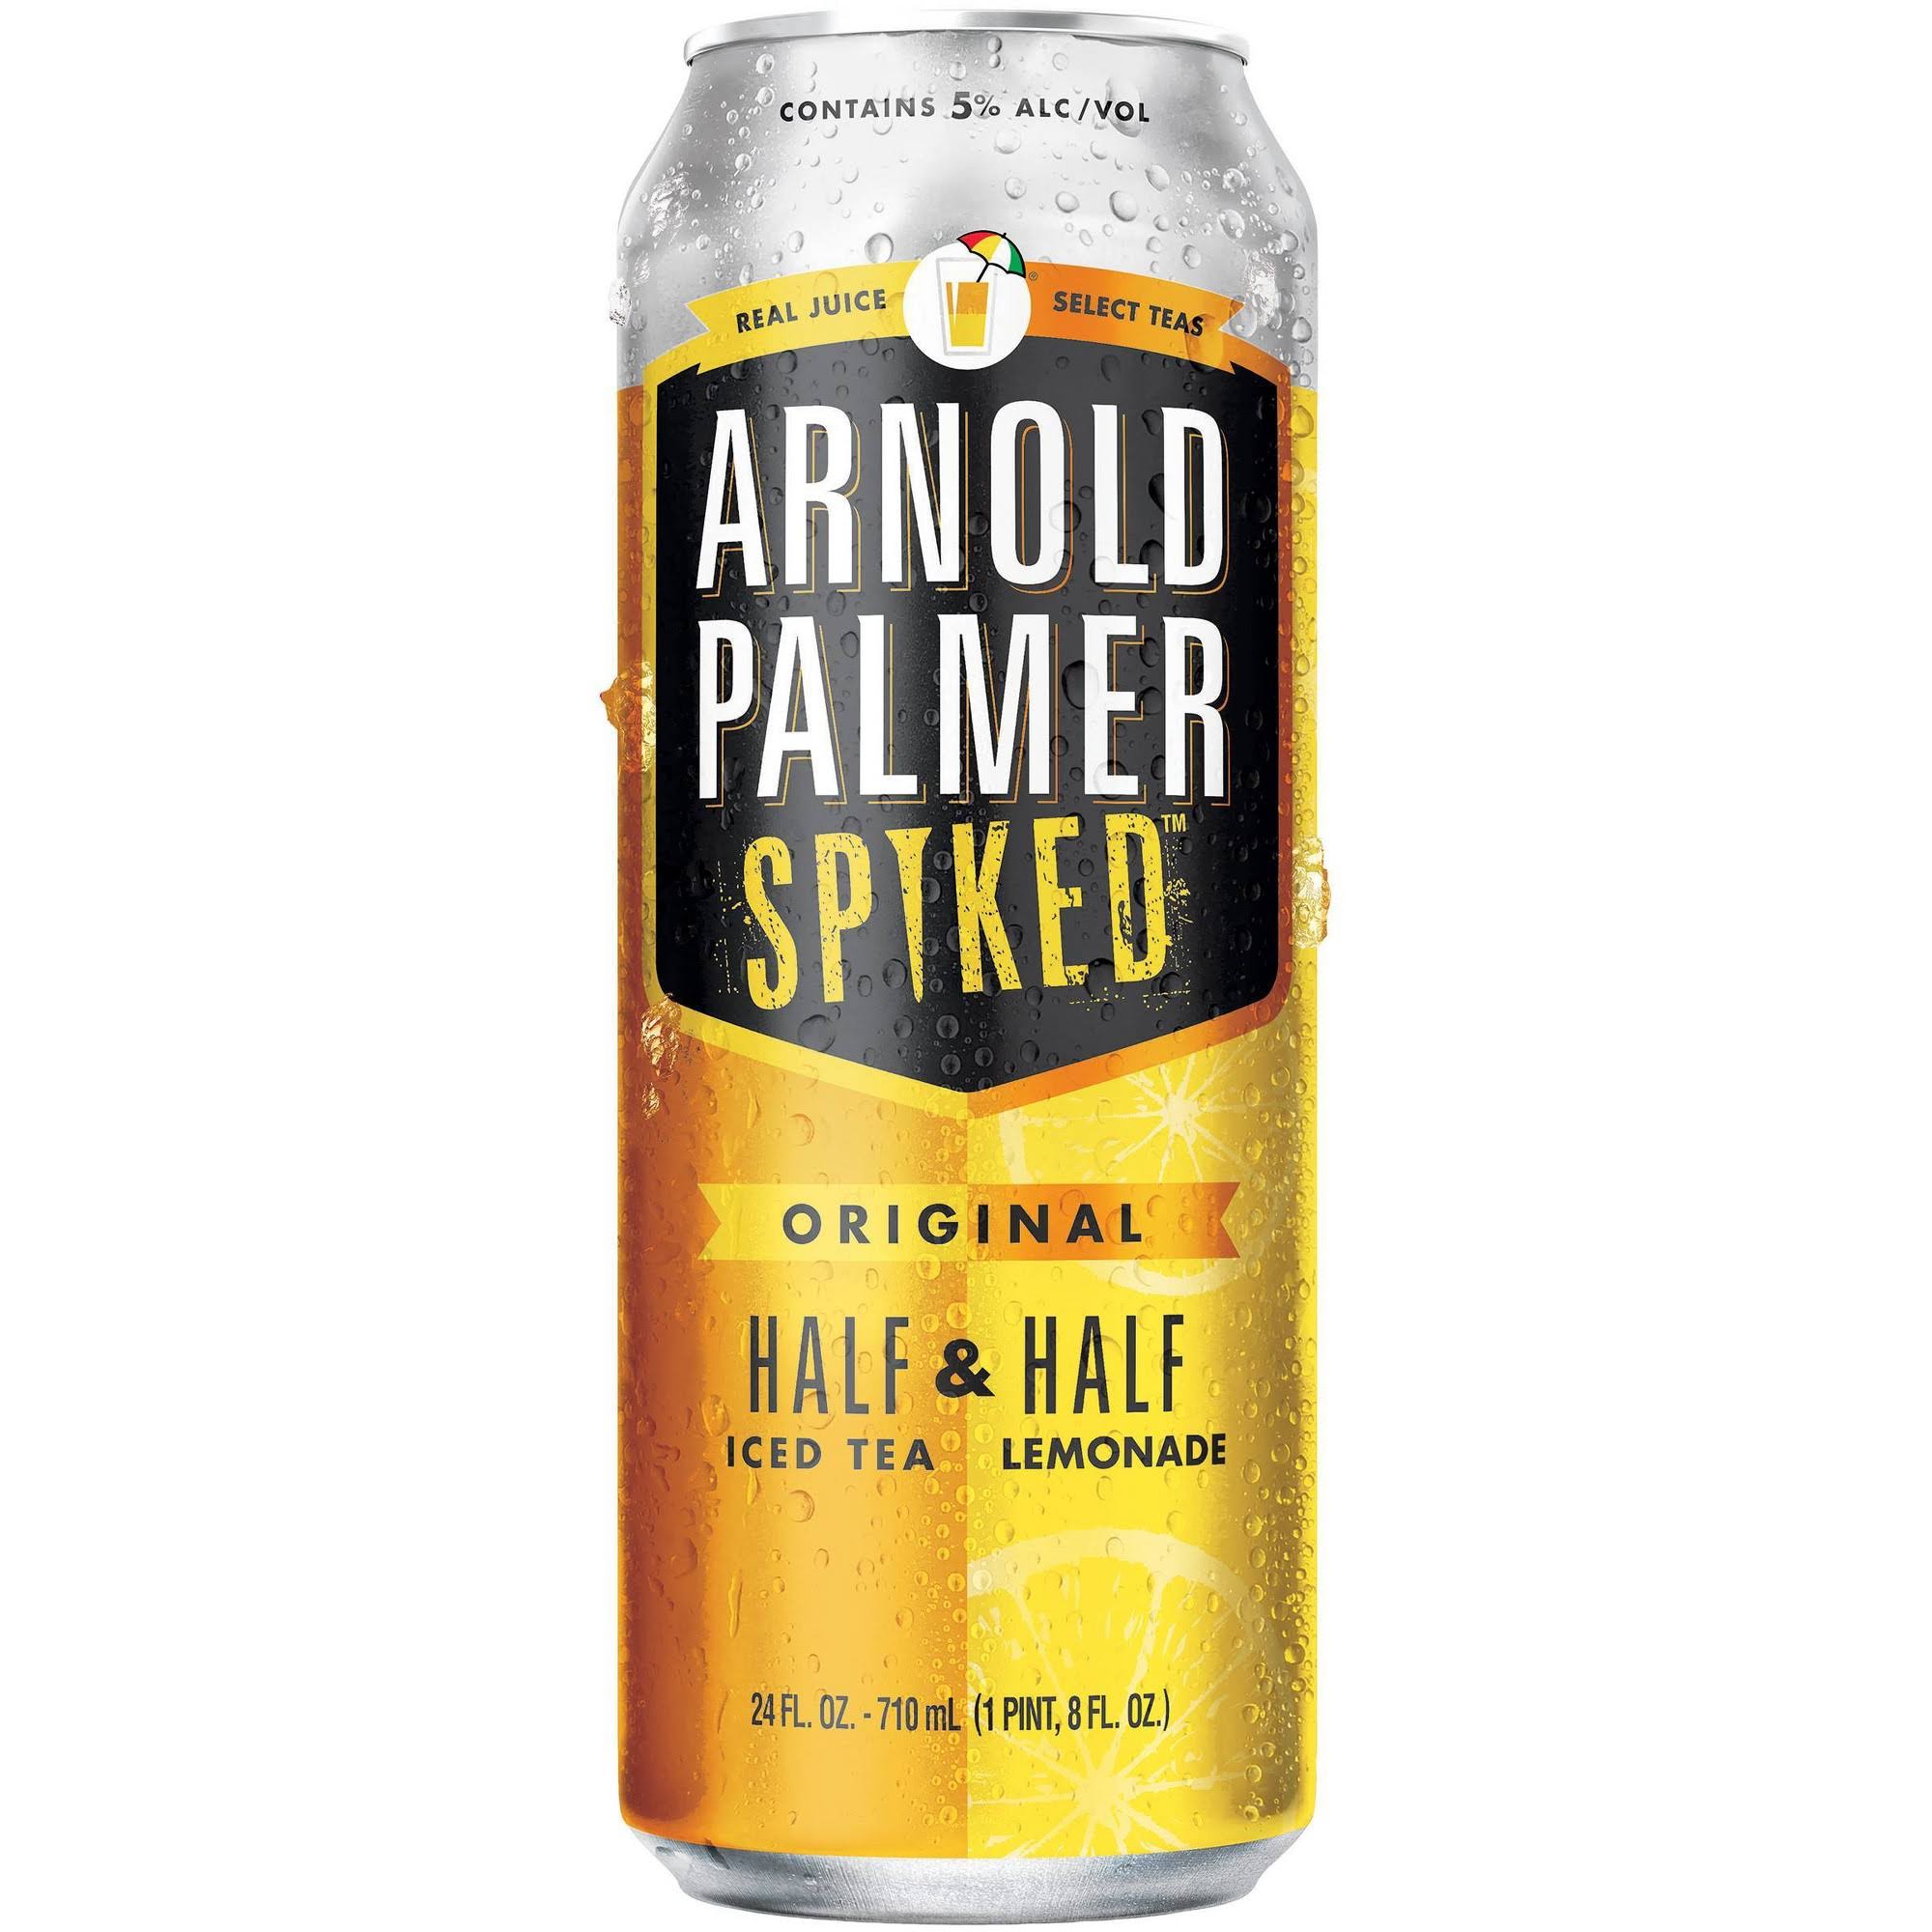 Arnold Palmer Spiked Half & Half, Iced Tea & Lemonade, Original - 24 fl oz